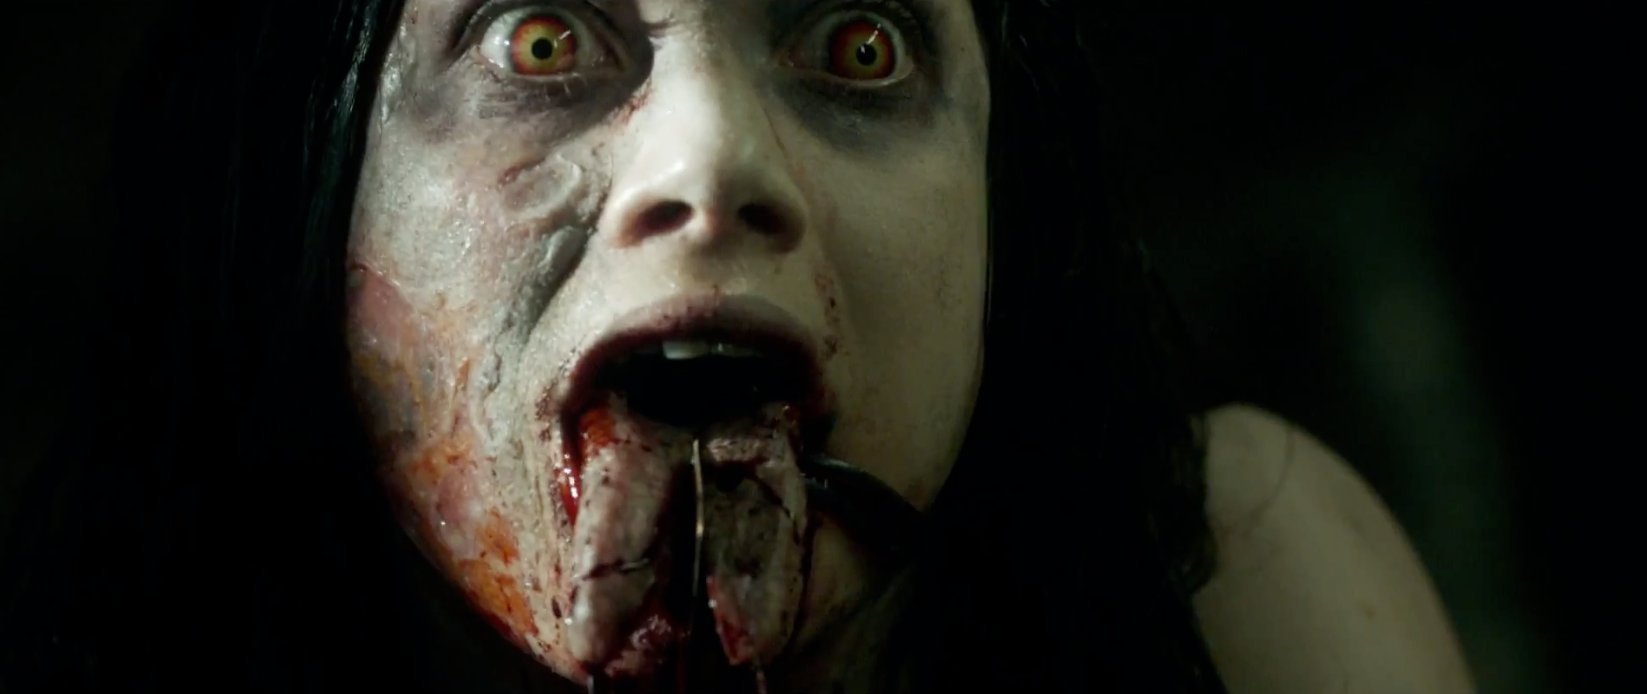 Best Gore Horror Movies To Watch 

